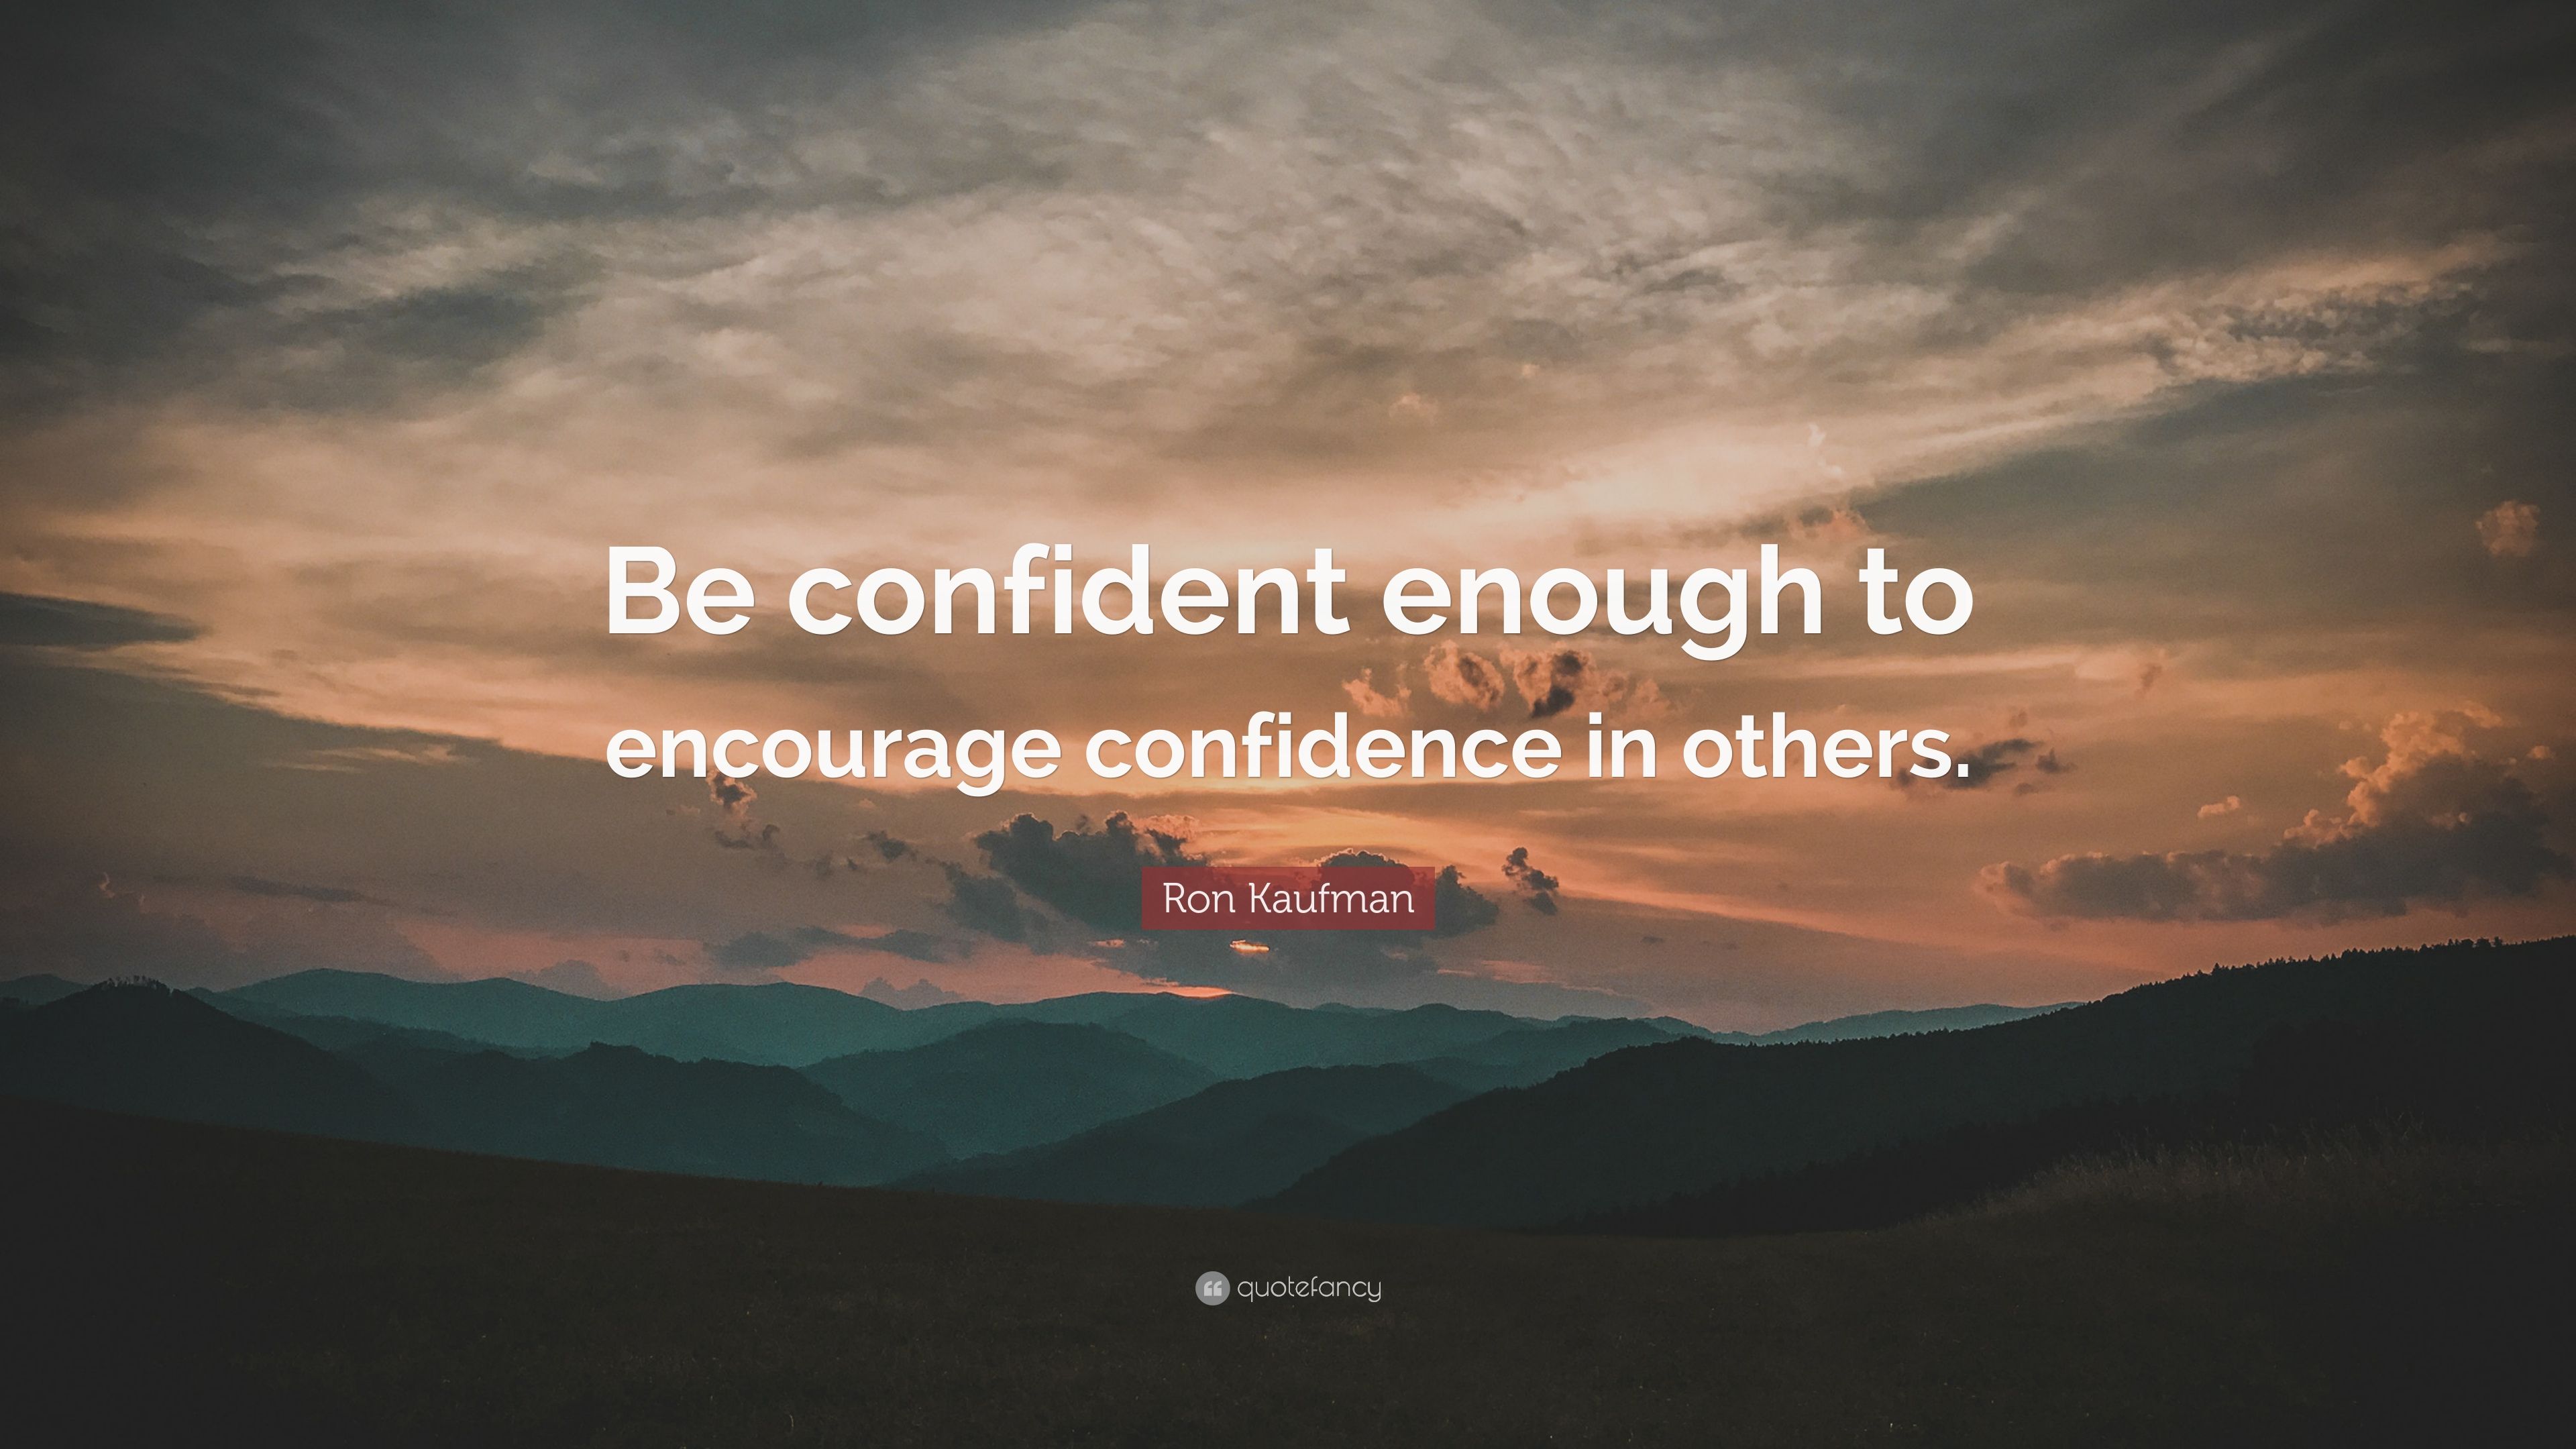 Ron Kaufman Quote: “Be confident enough to encourage confidence